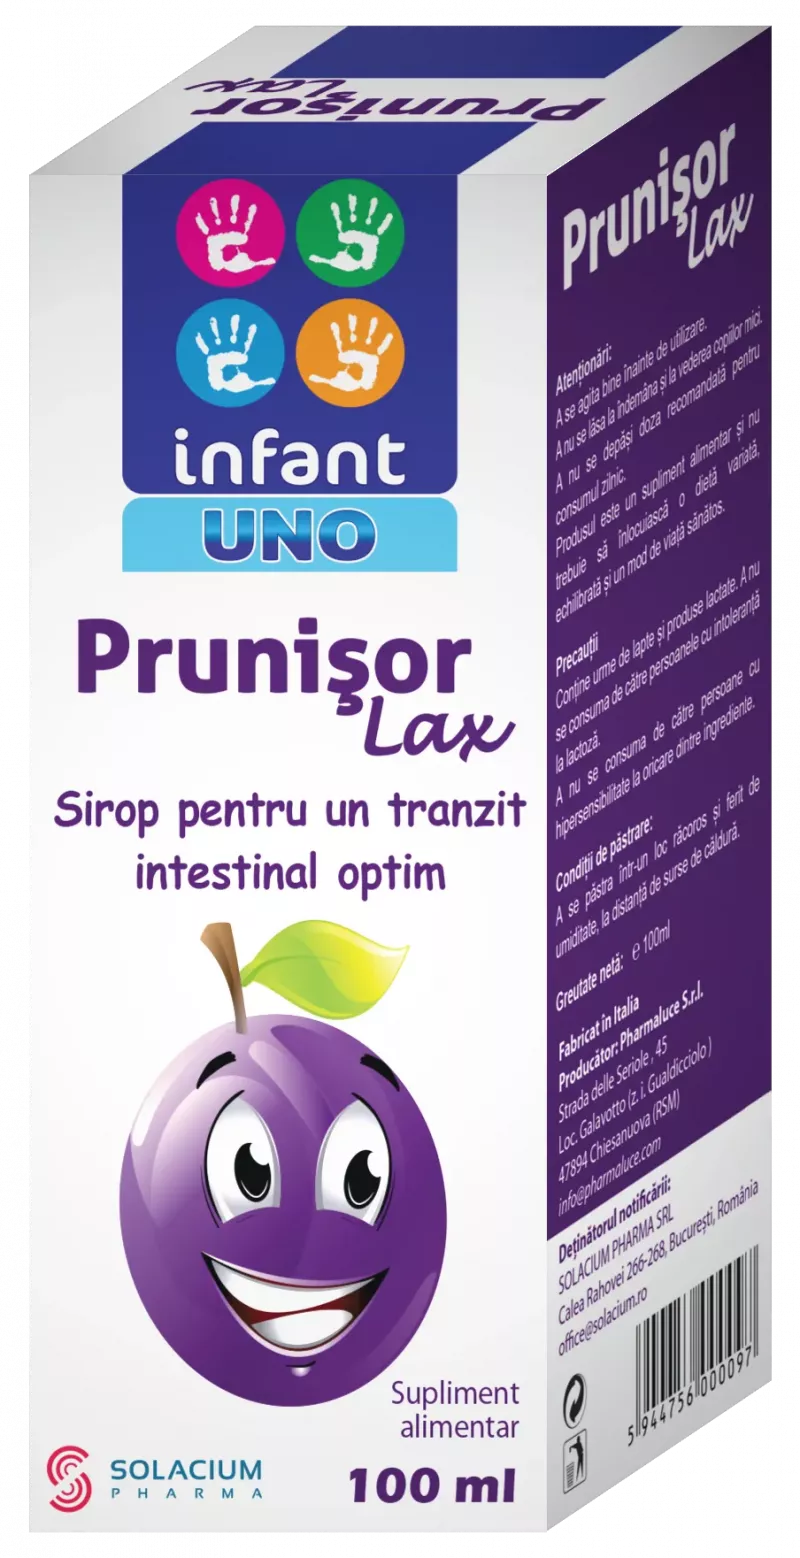 Infant Uno Prunisor Lax sirop laxativ pentru copii x 100ml, [],medik-on.ro